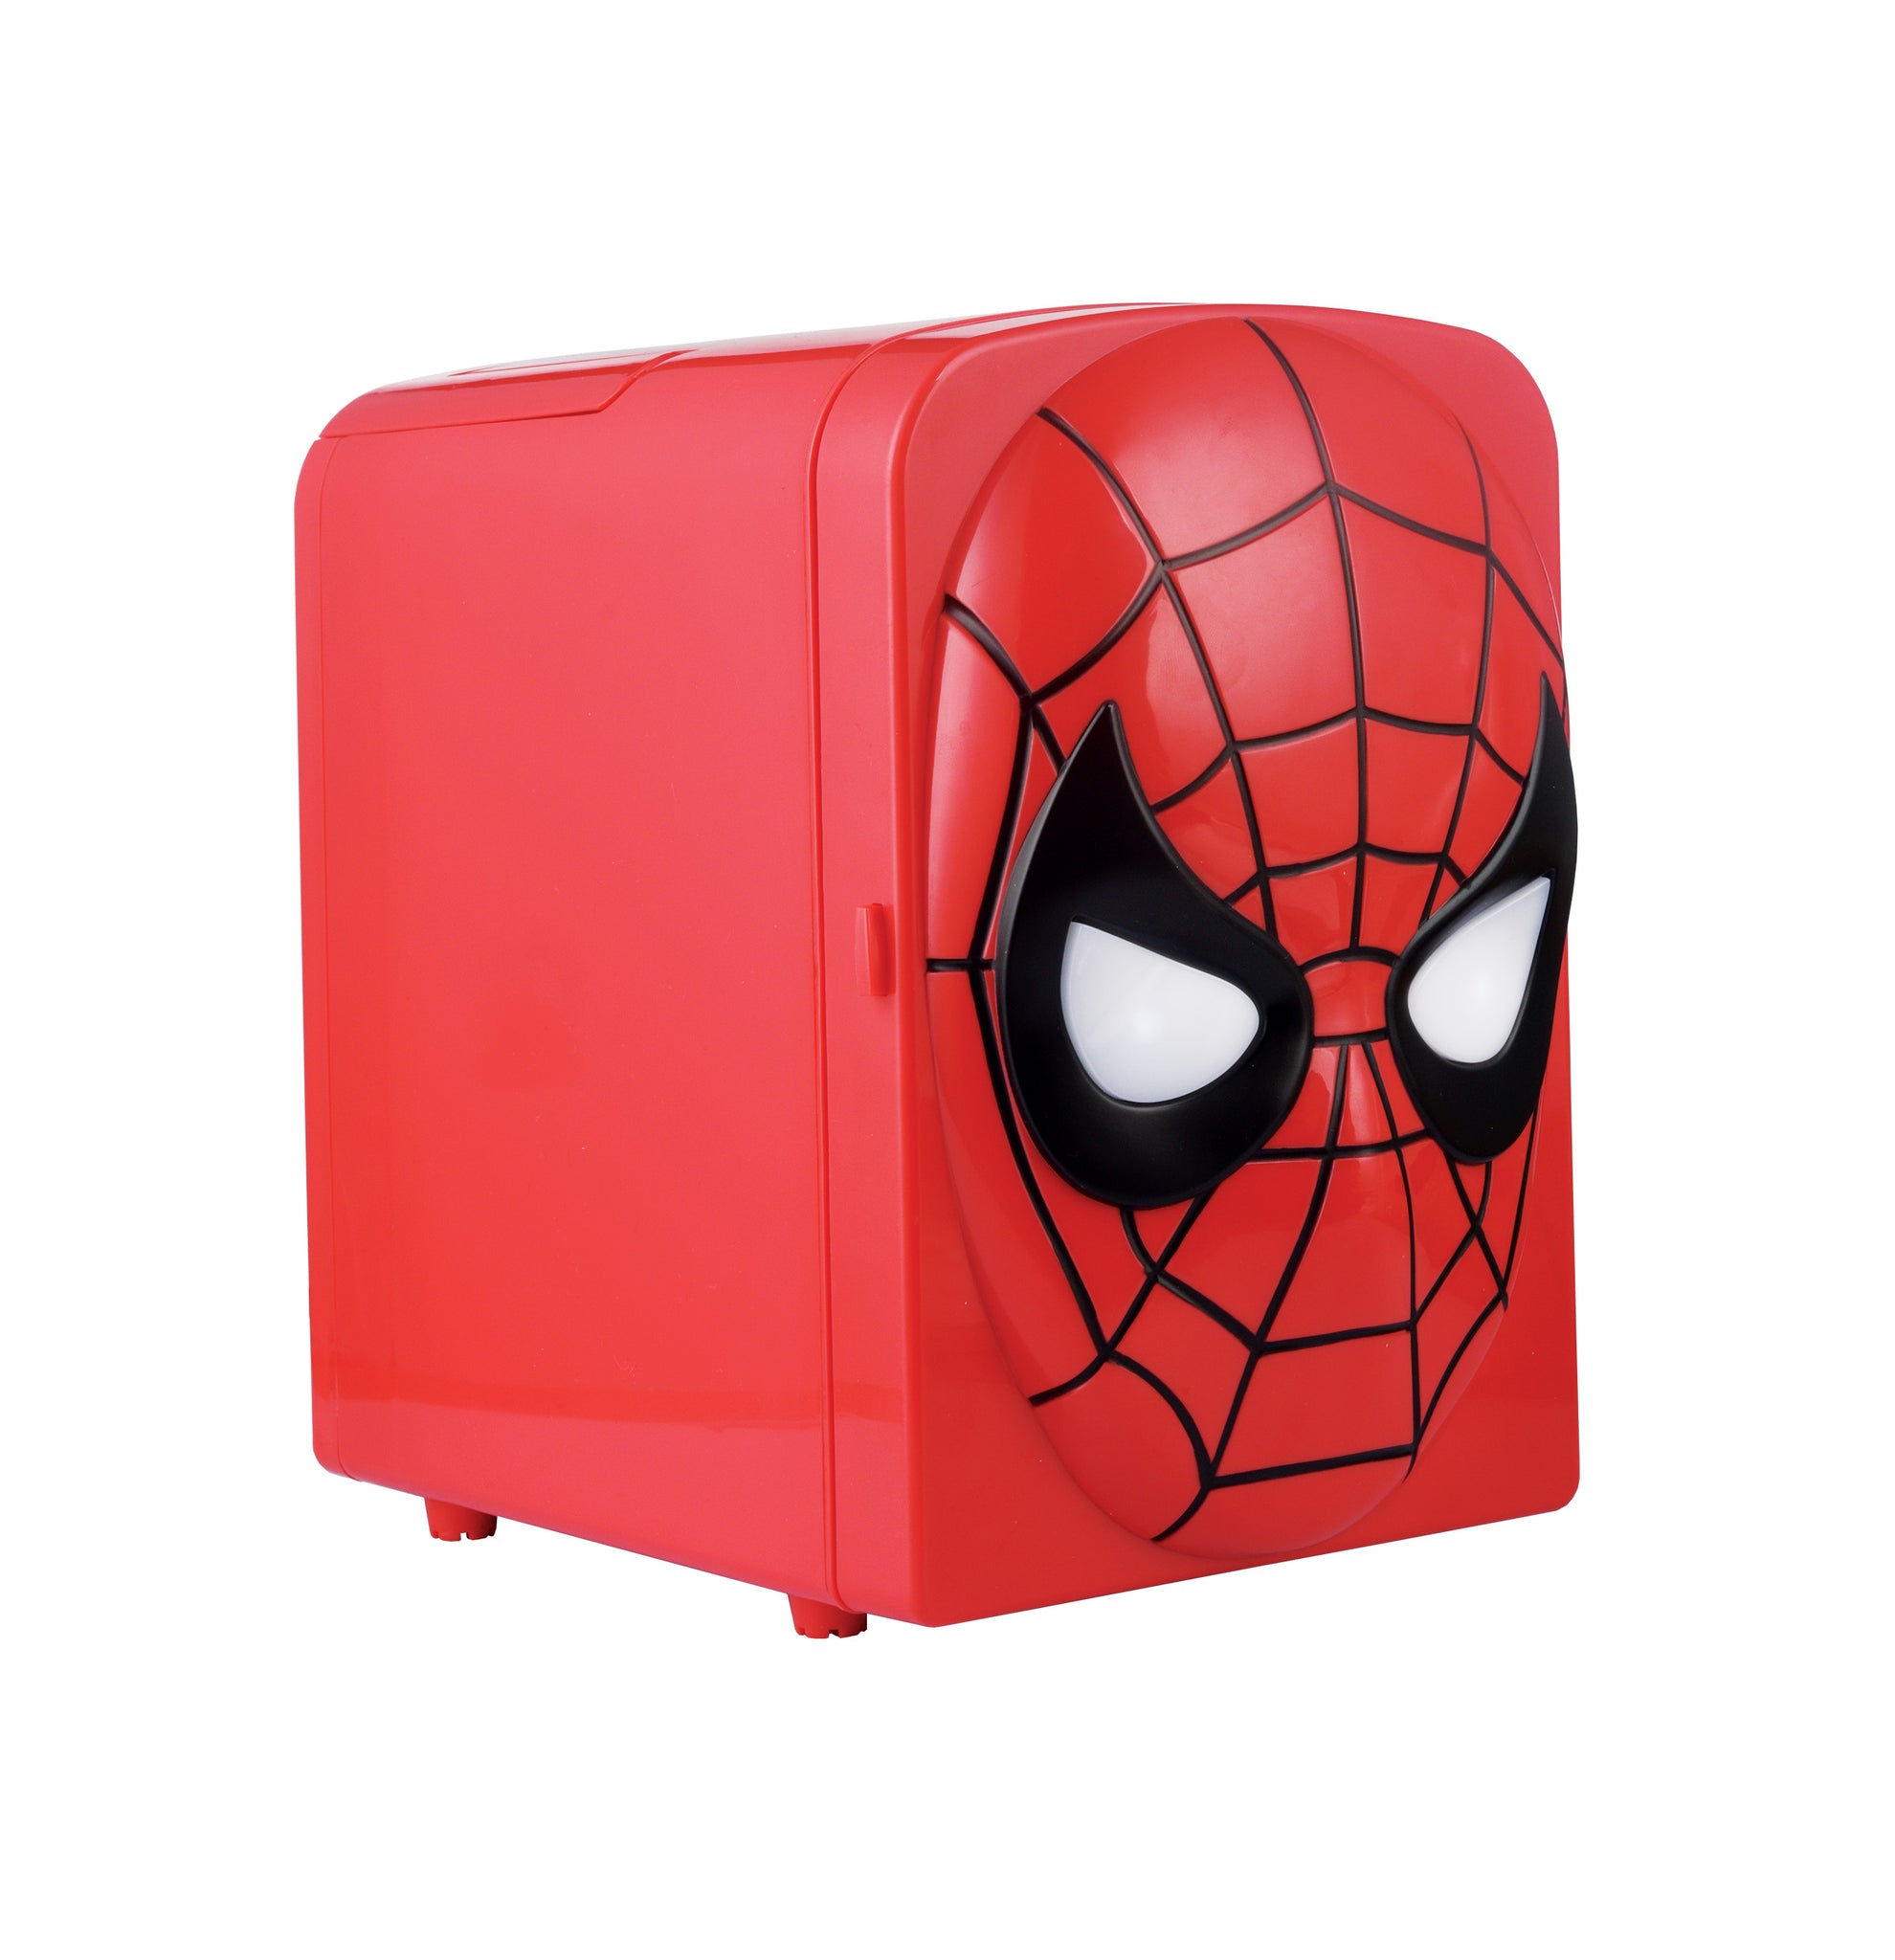 Marvel Spider-Man 4 Liter Thermoelectric Cooler